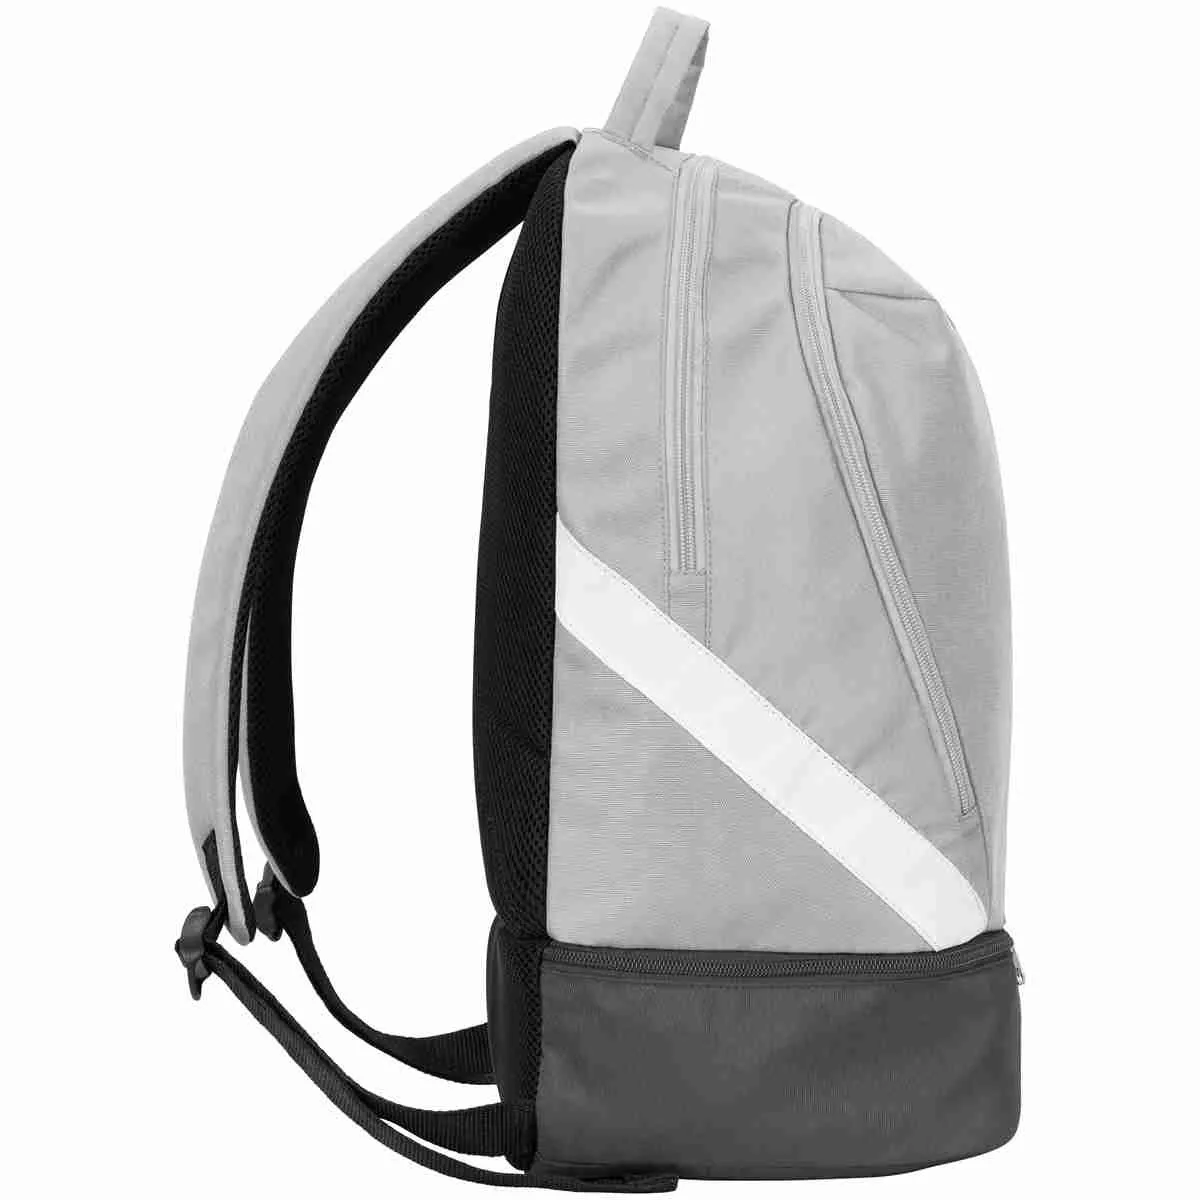 Jako backpack Iconic soft grey/anthra light